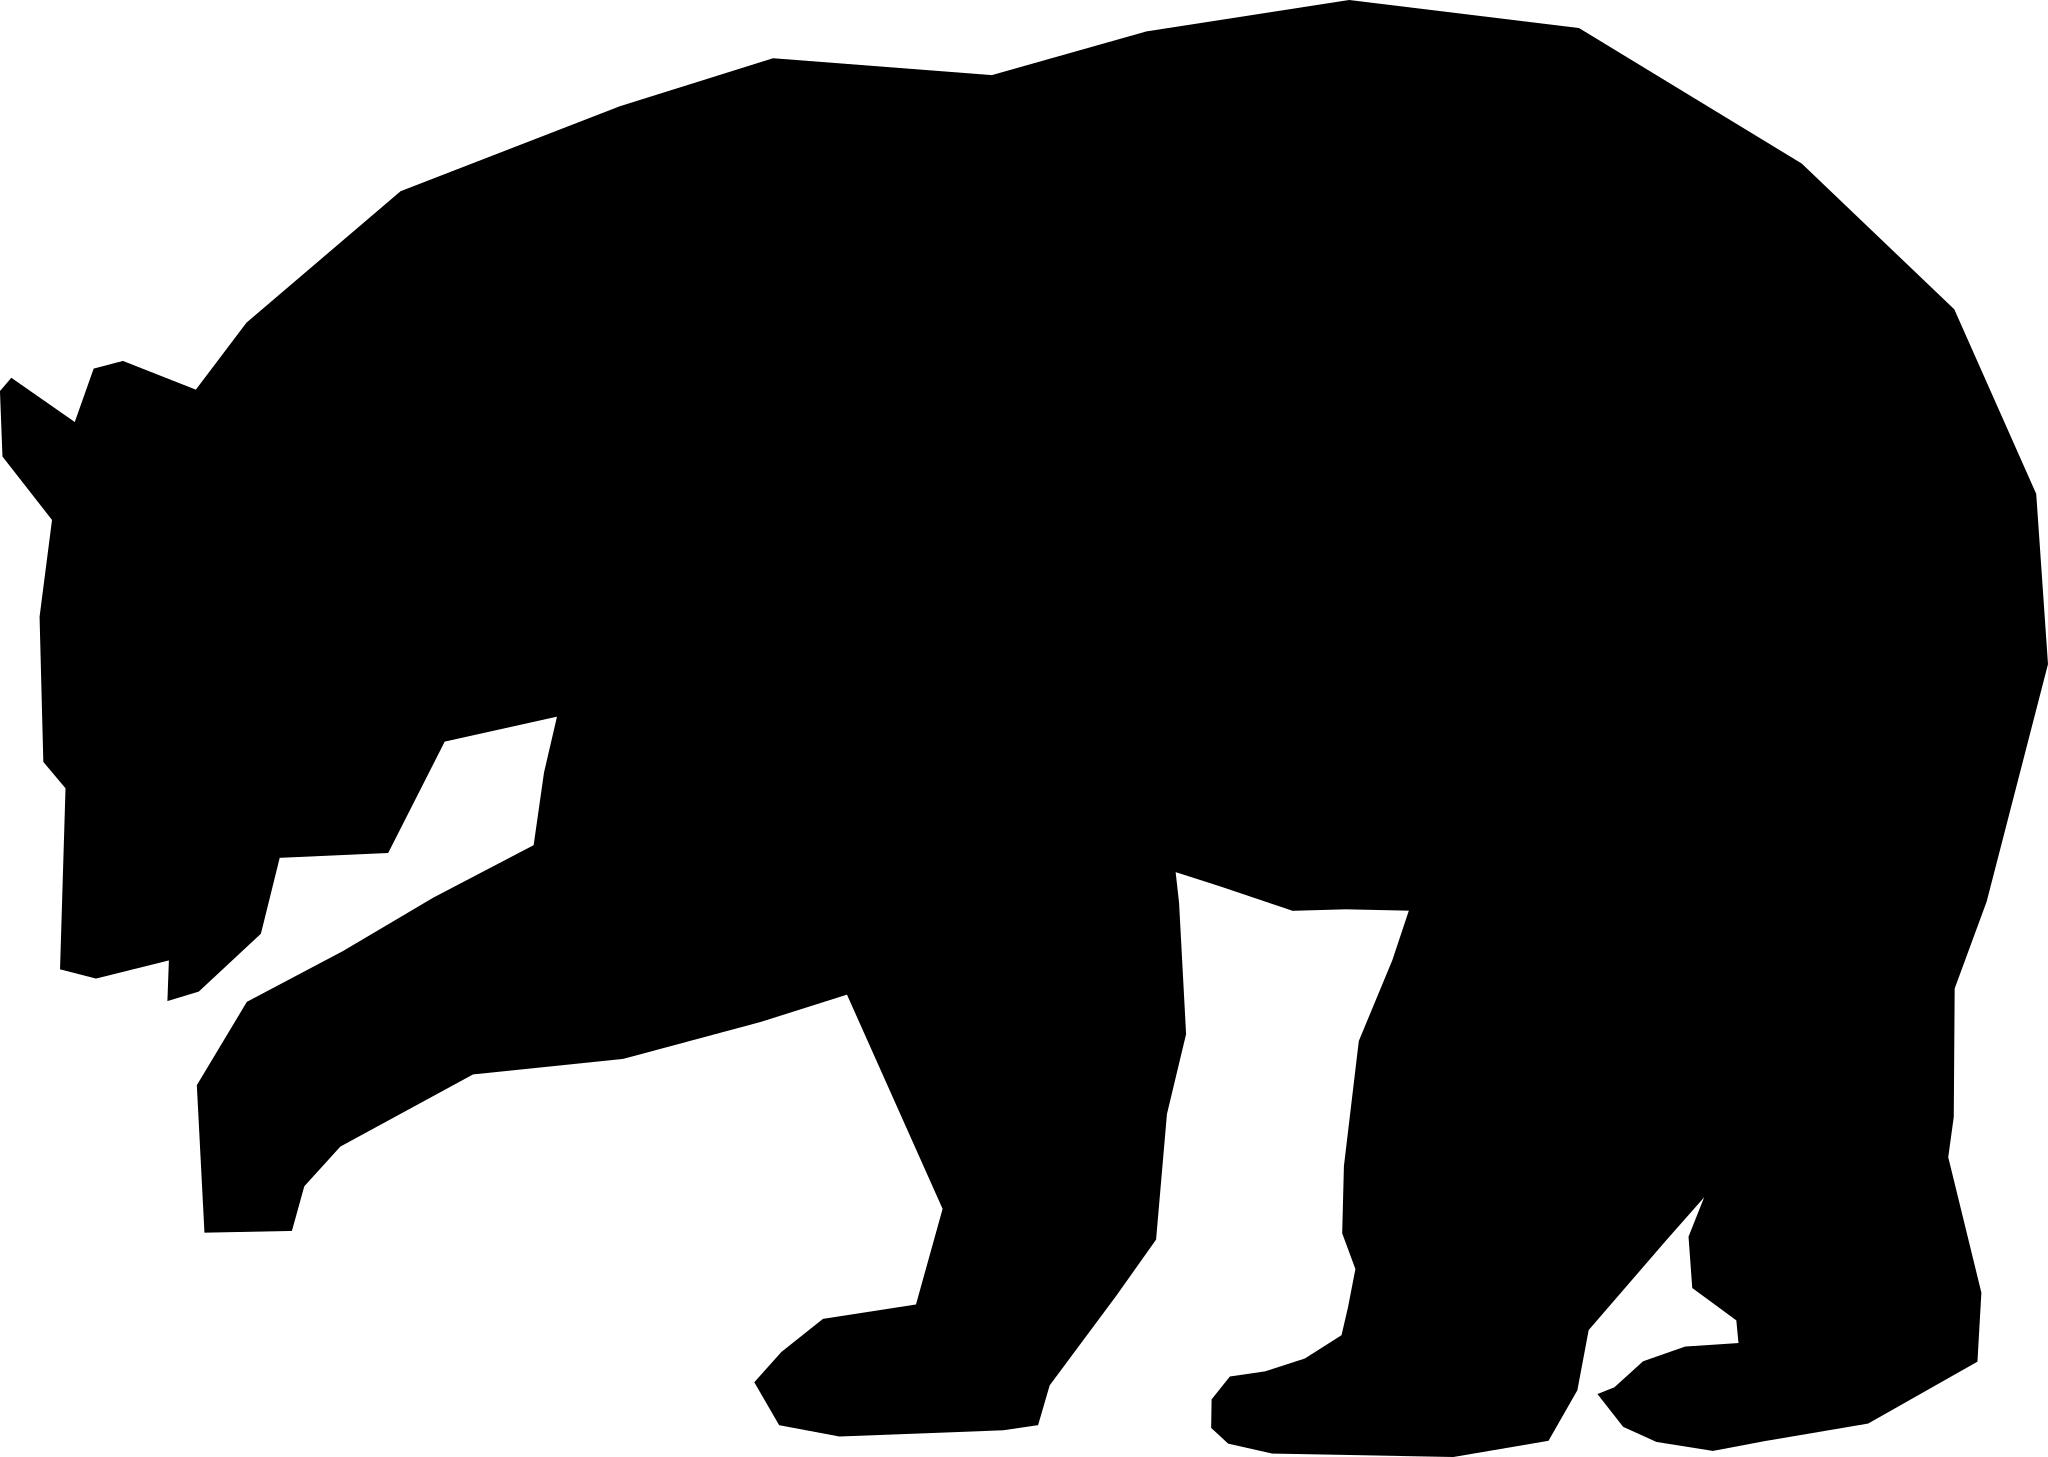 Силуэт медведя